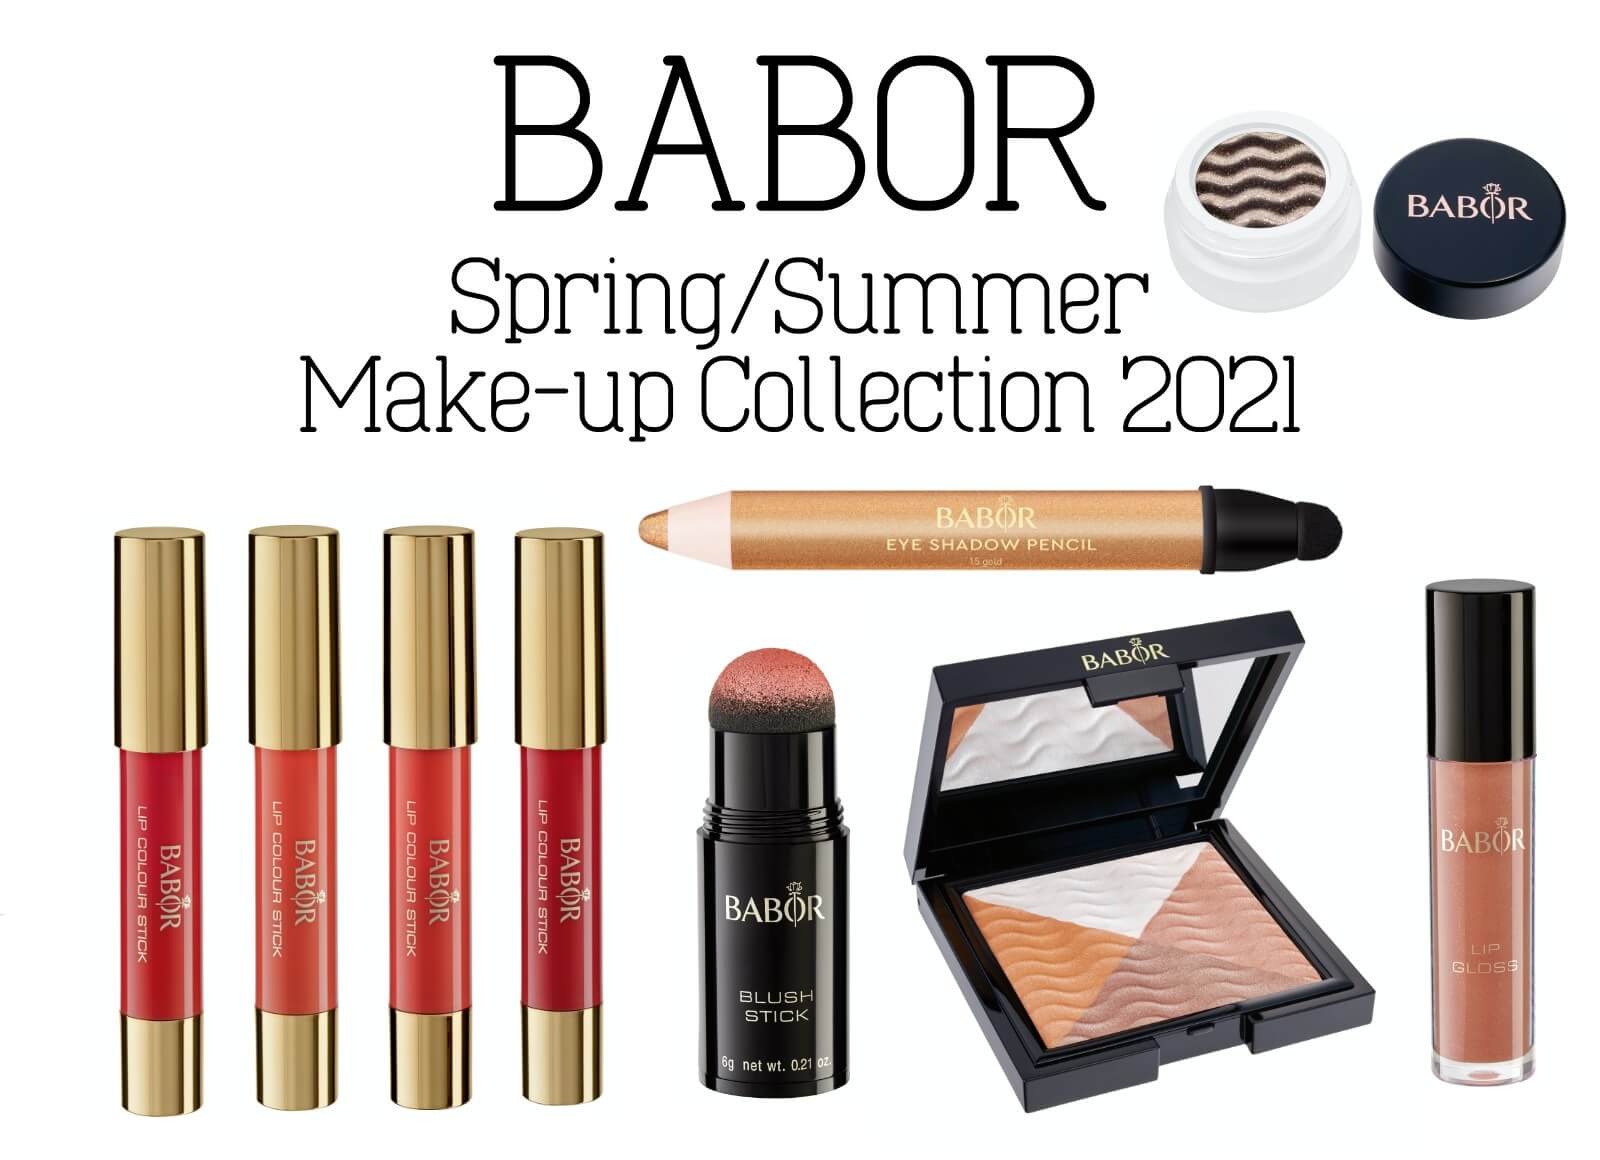 BABOR Spring/Summer Make-up Collection 2021